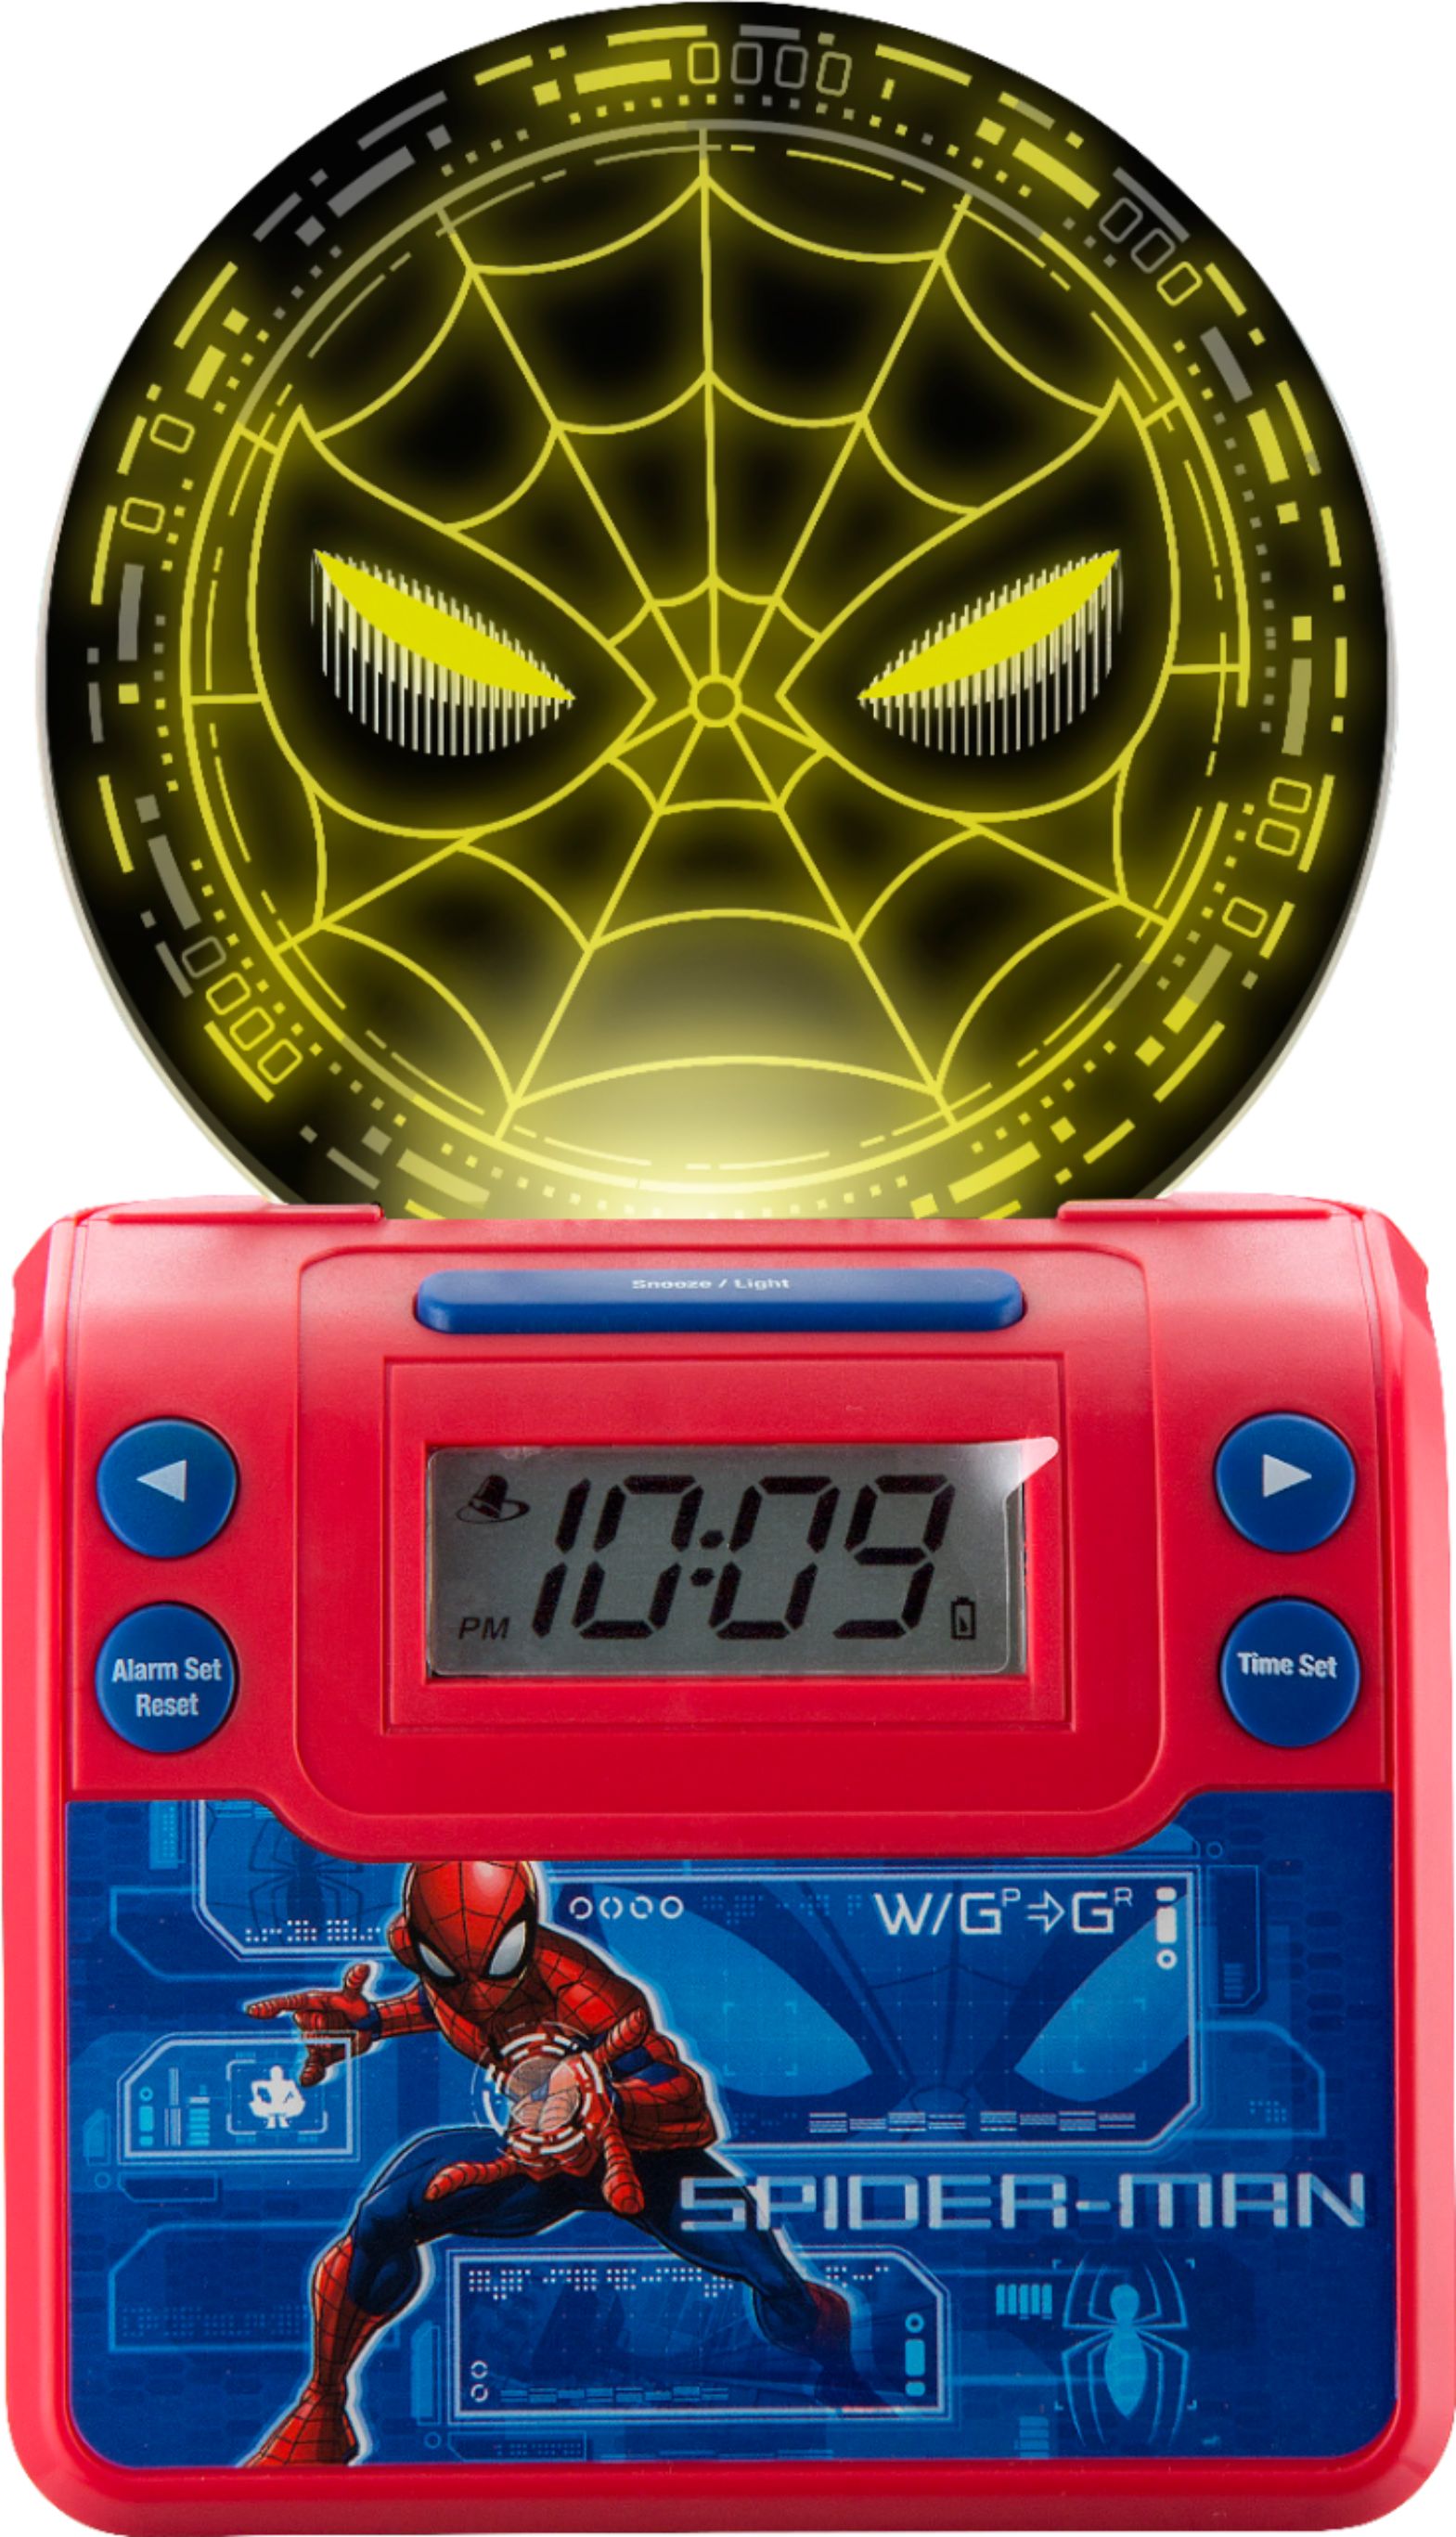 eKids Marvel SpiderMan Alarm Clock Red 92298943893 eBay